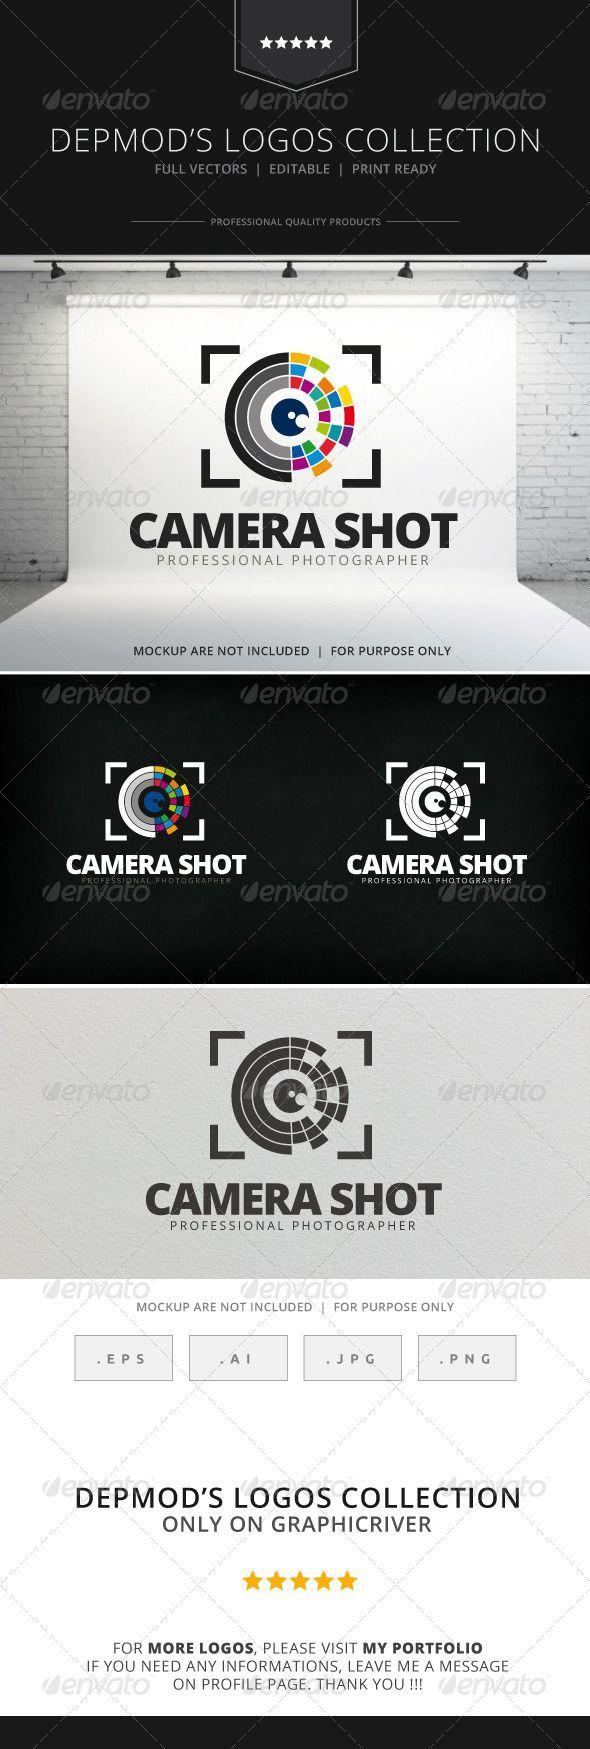 Colorful Camera Shutter Logo - Logo of a stylized colorful camera shutter (with framing). Full ...